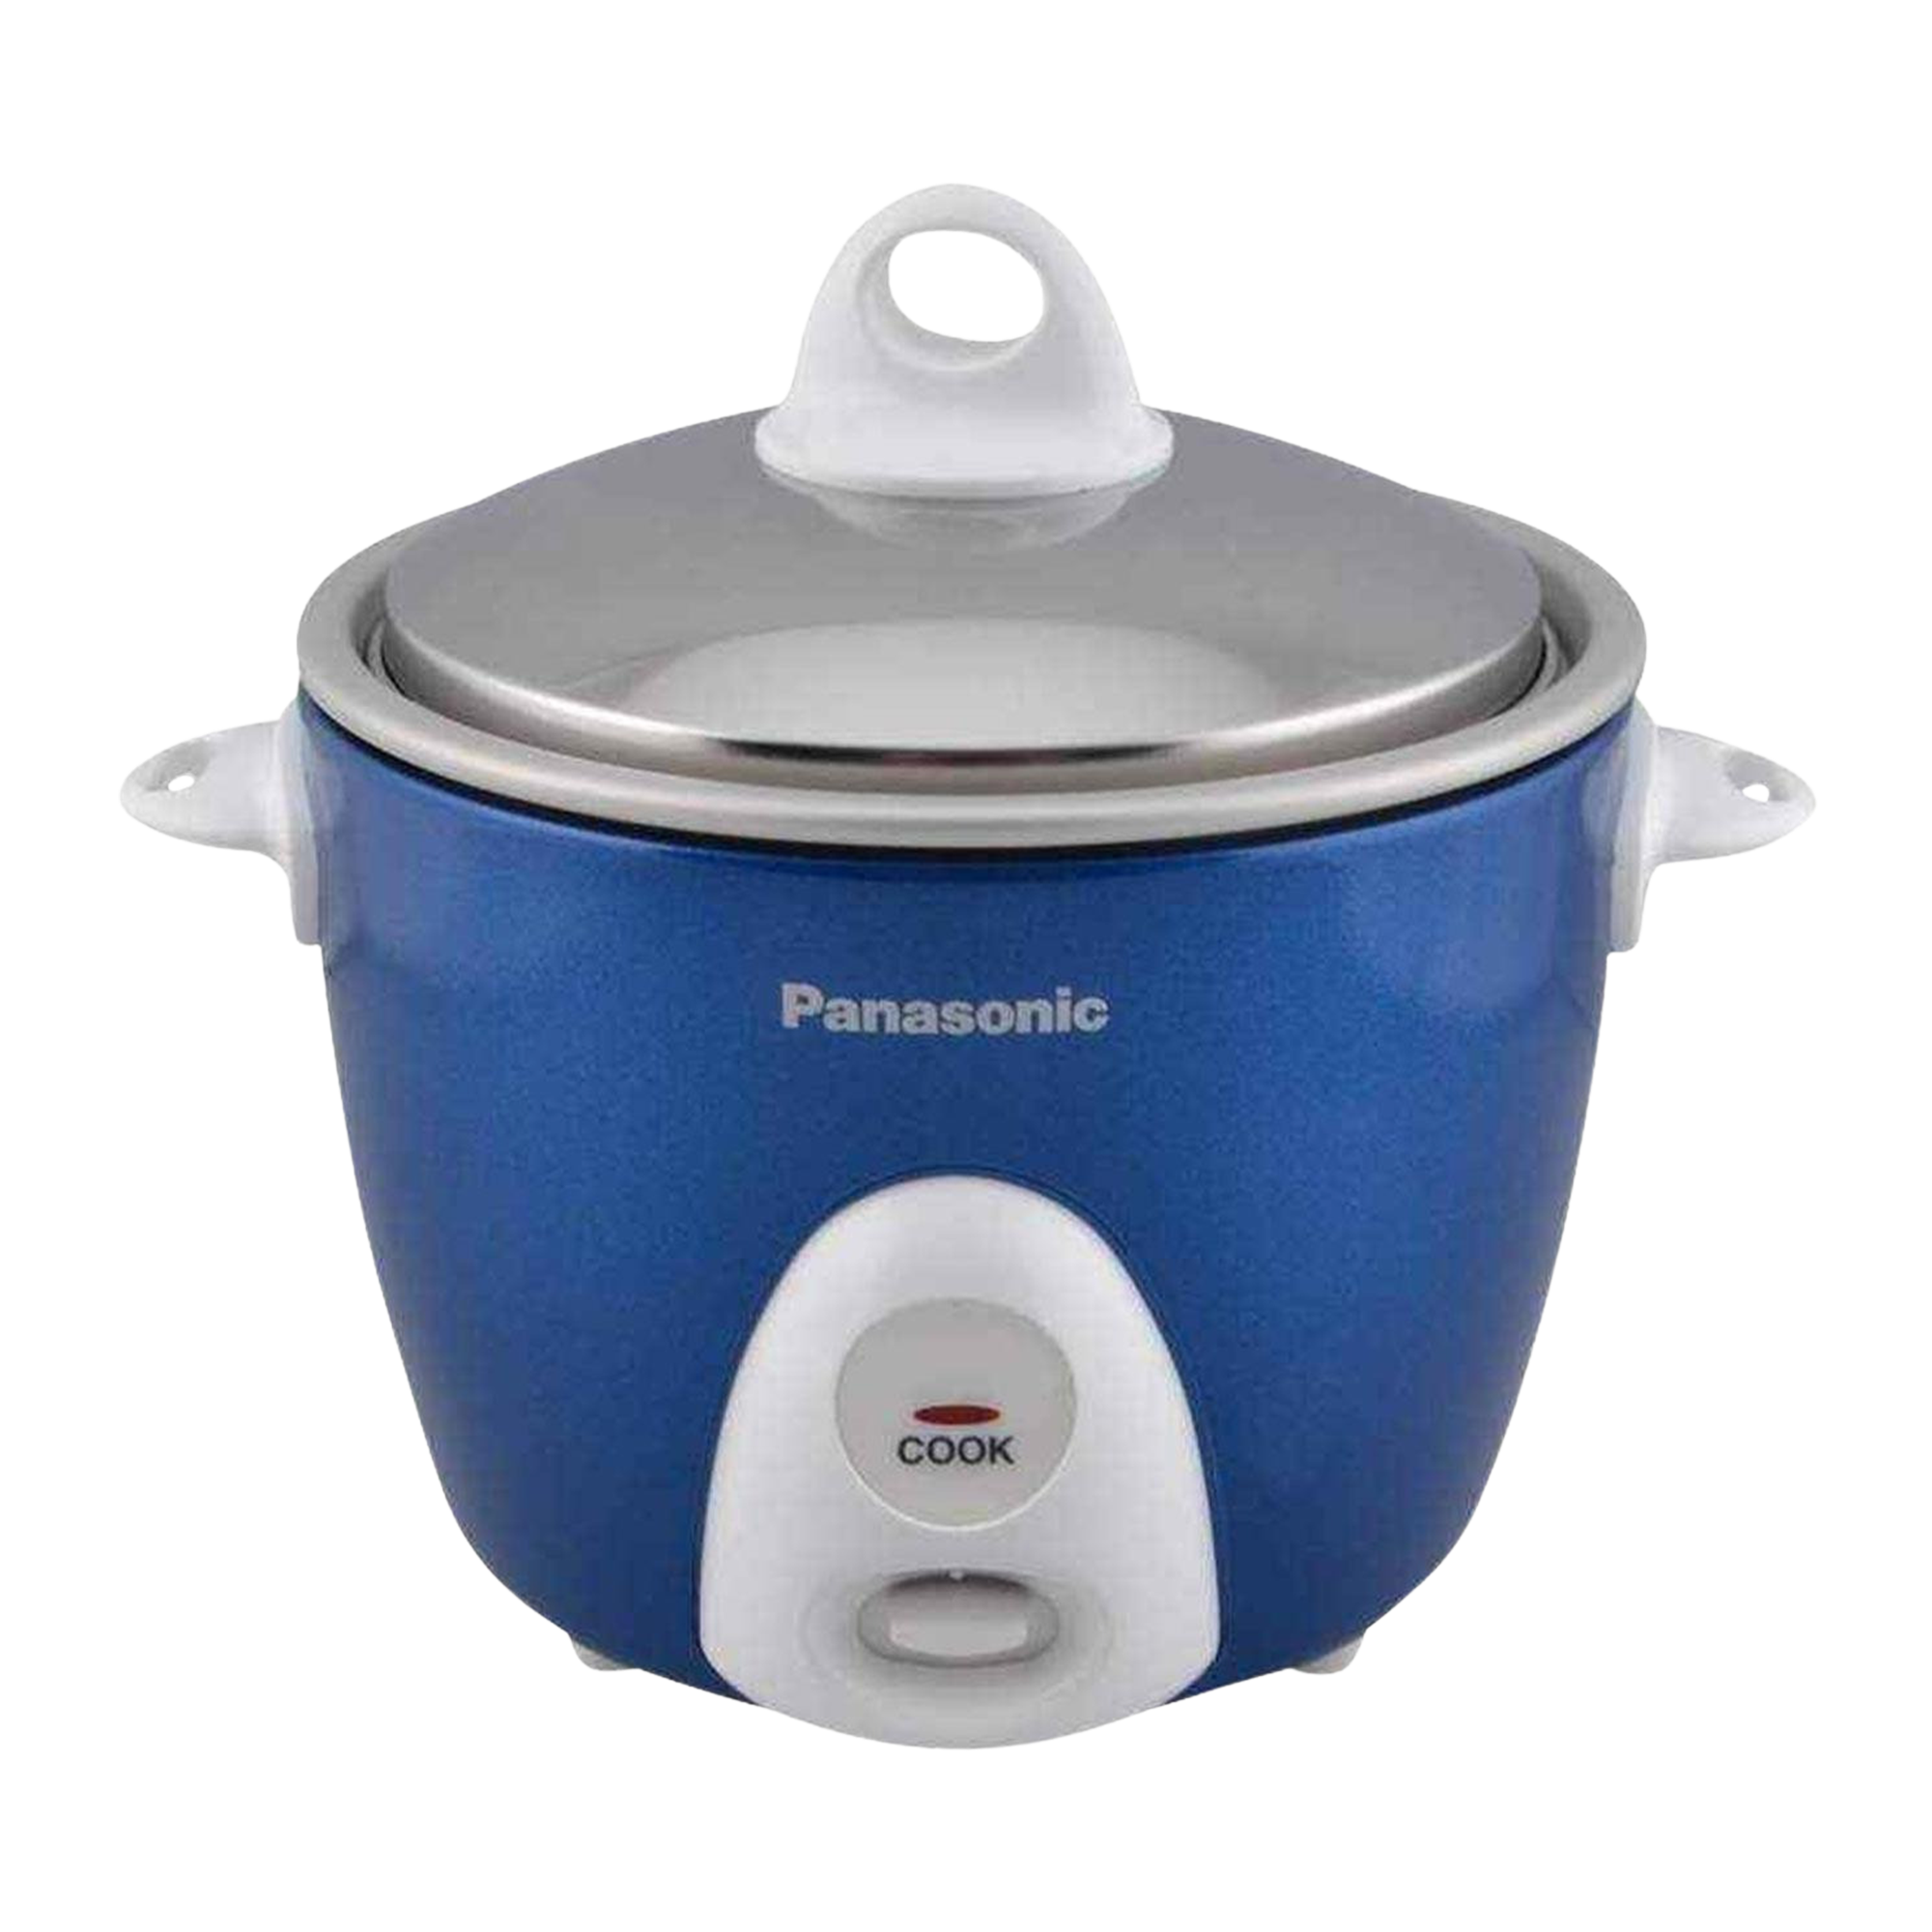 Panasonic SR G06D Baby 0.6 Litre Electric Rice Cooker Blue